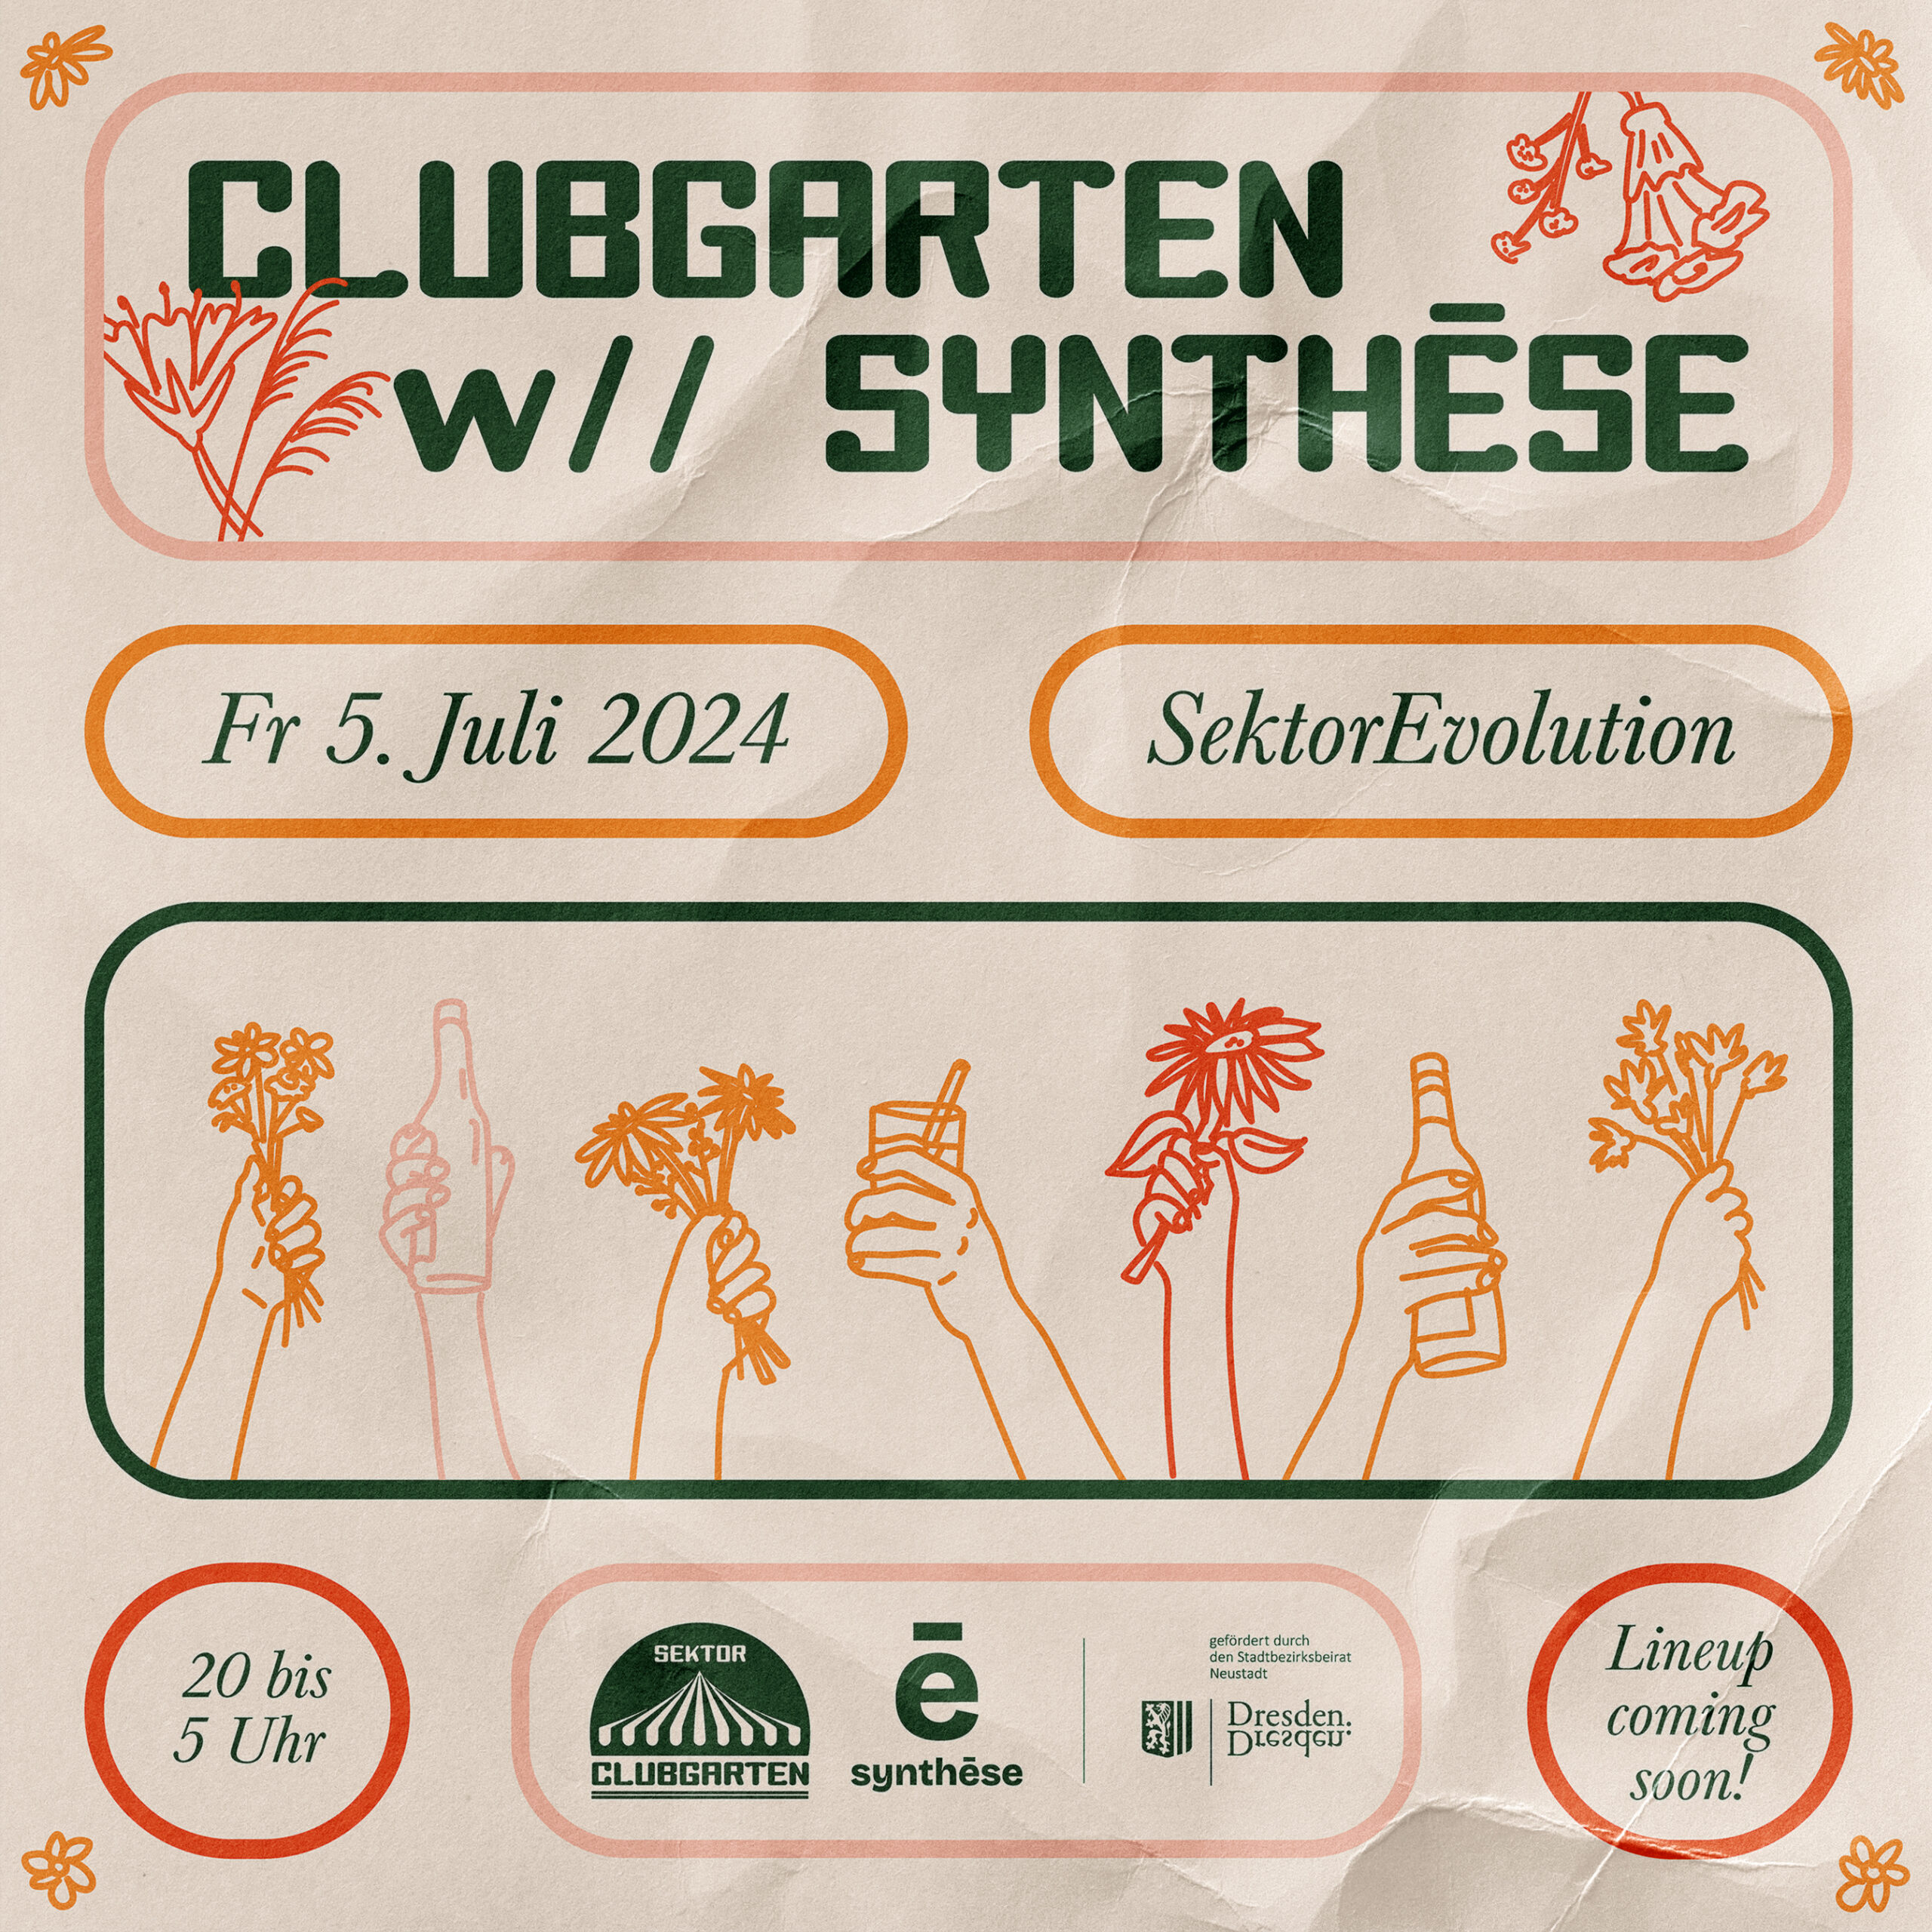 Sektor Clubgarten w// Synthese e.V